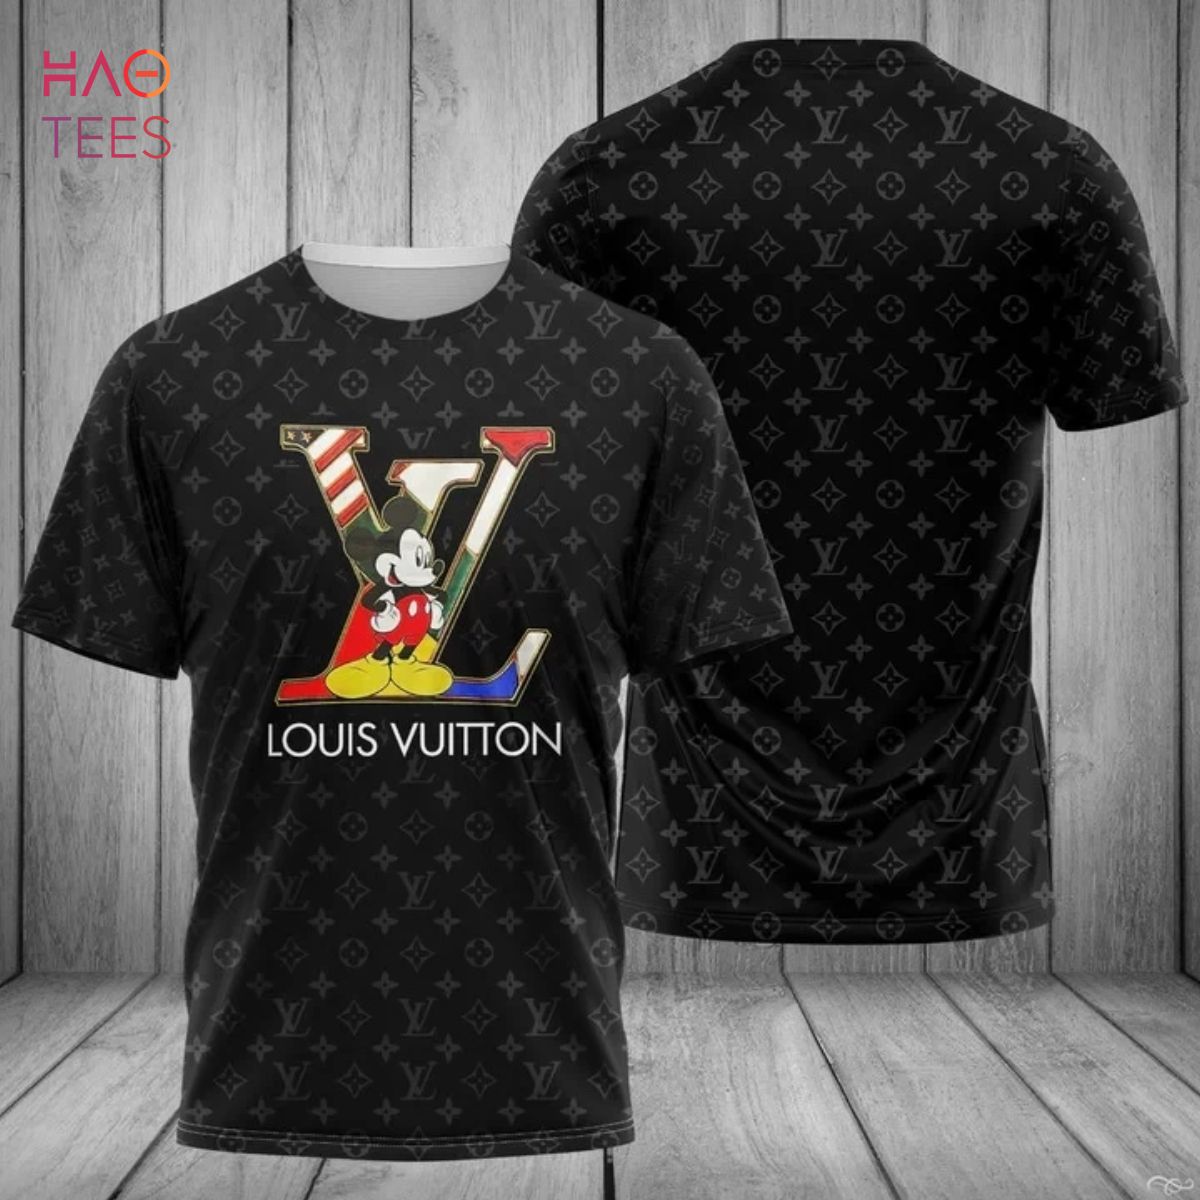 Louis Vuitton Louis 4 Vuitton T-Shirt